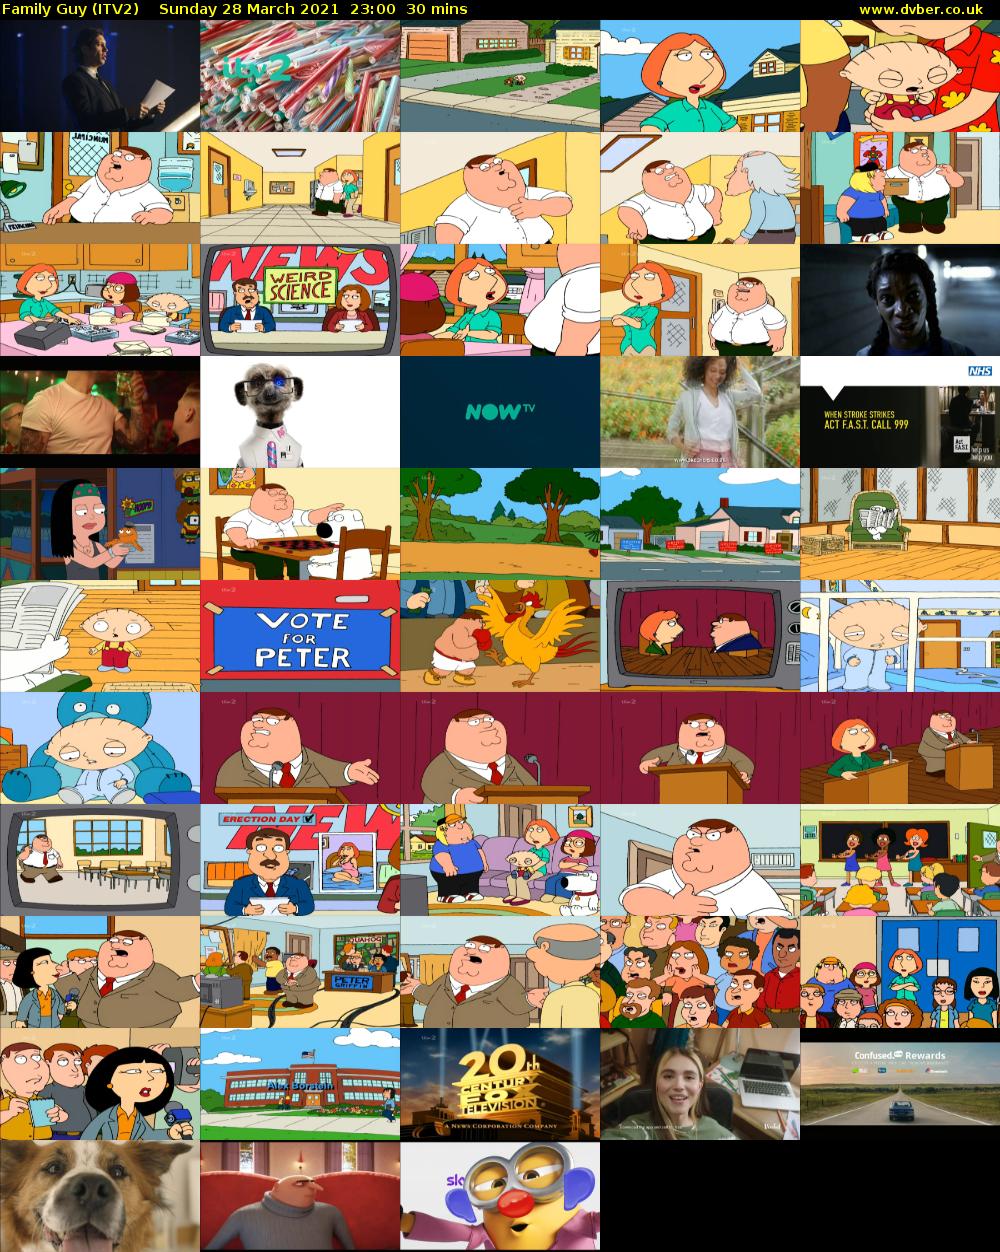 Family Guy (ITV2) Sunday 28 March 2021 23:00 - 23:30